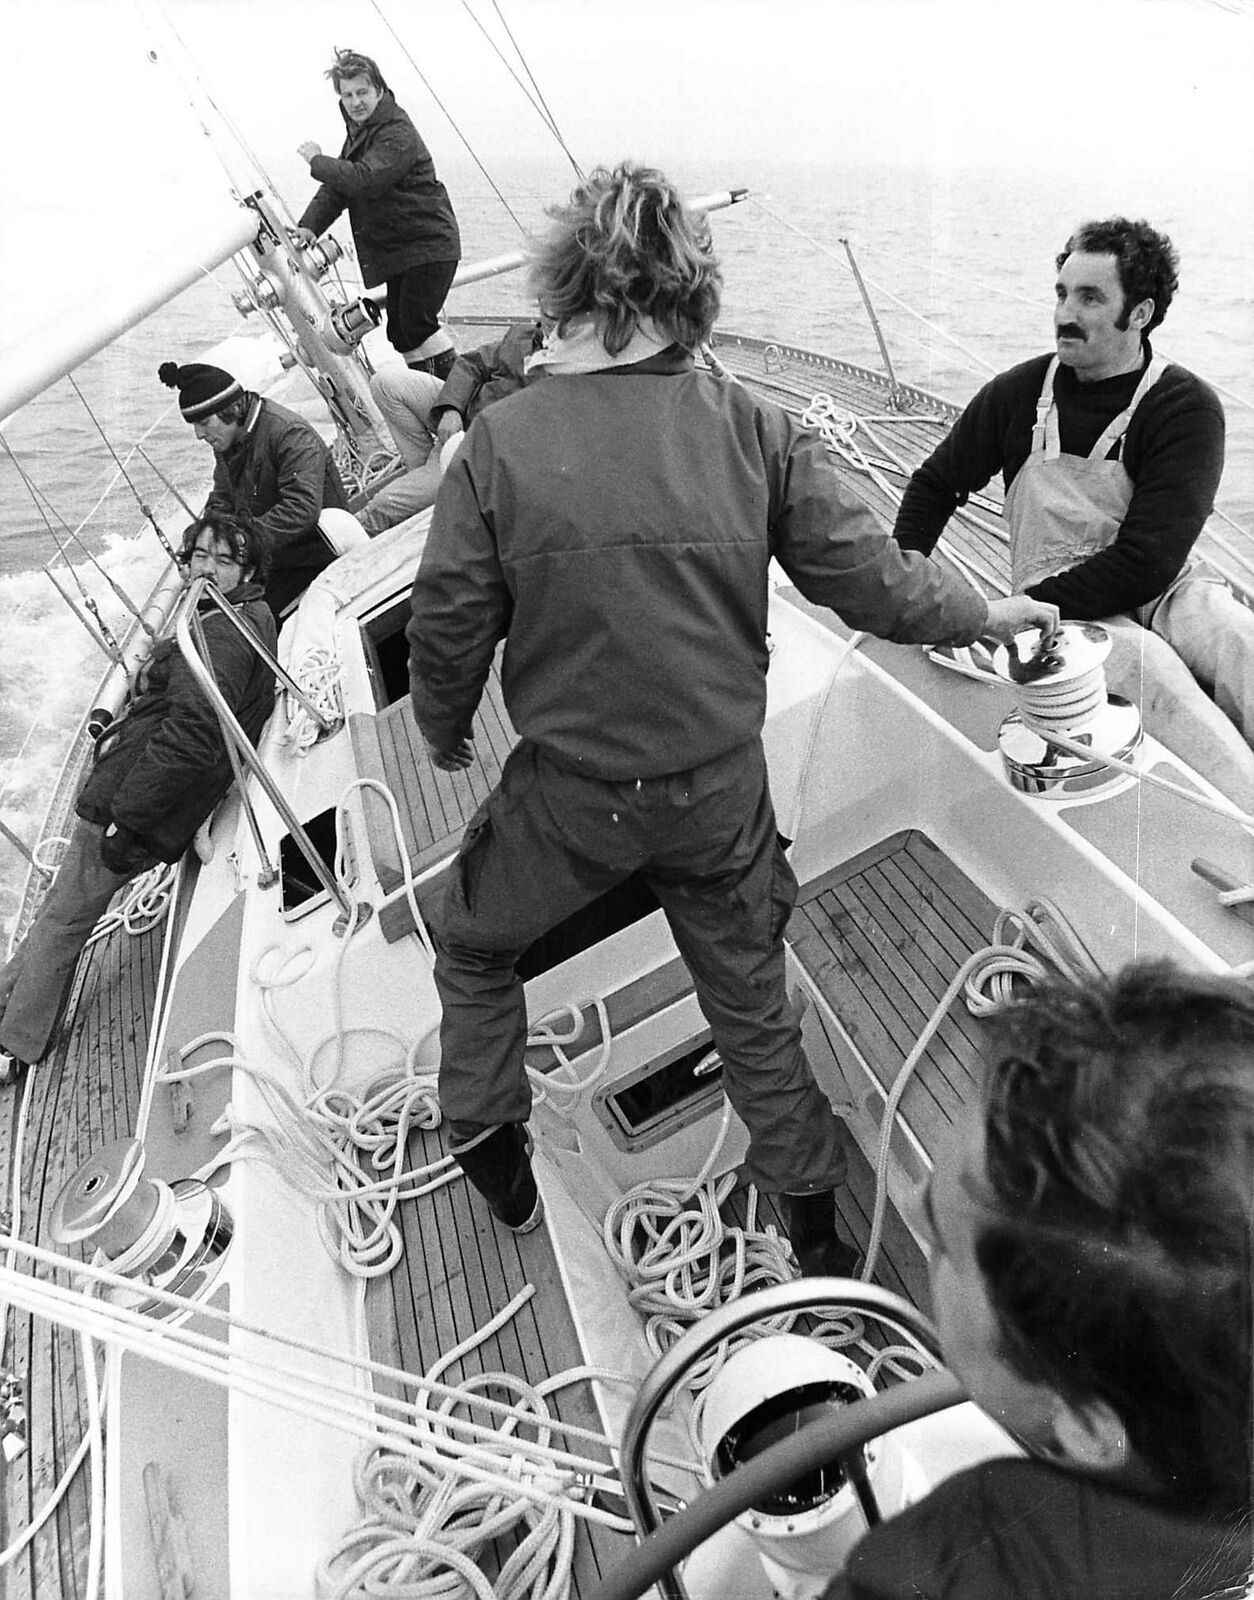 1973 Press Photo Holliday's KEALOAH Boat Crew Admirals Cup Solent yacht race kg